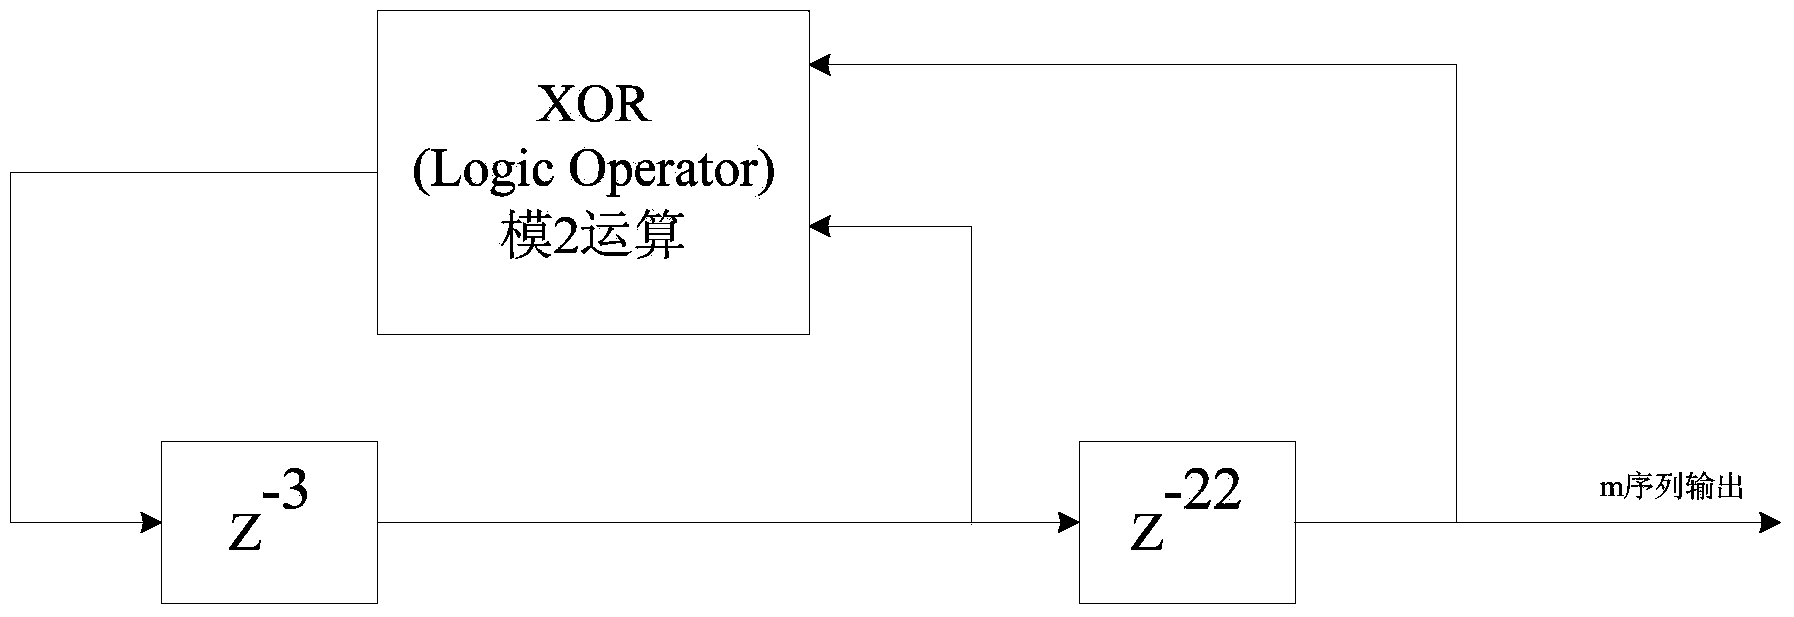 M sequence generator-based primitive polynomial pseudo-random sequence generator